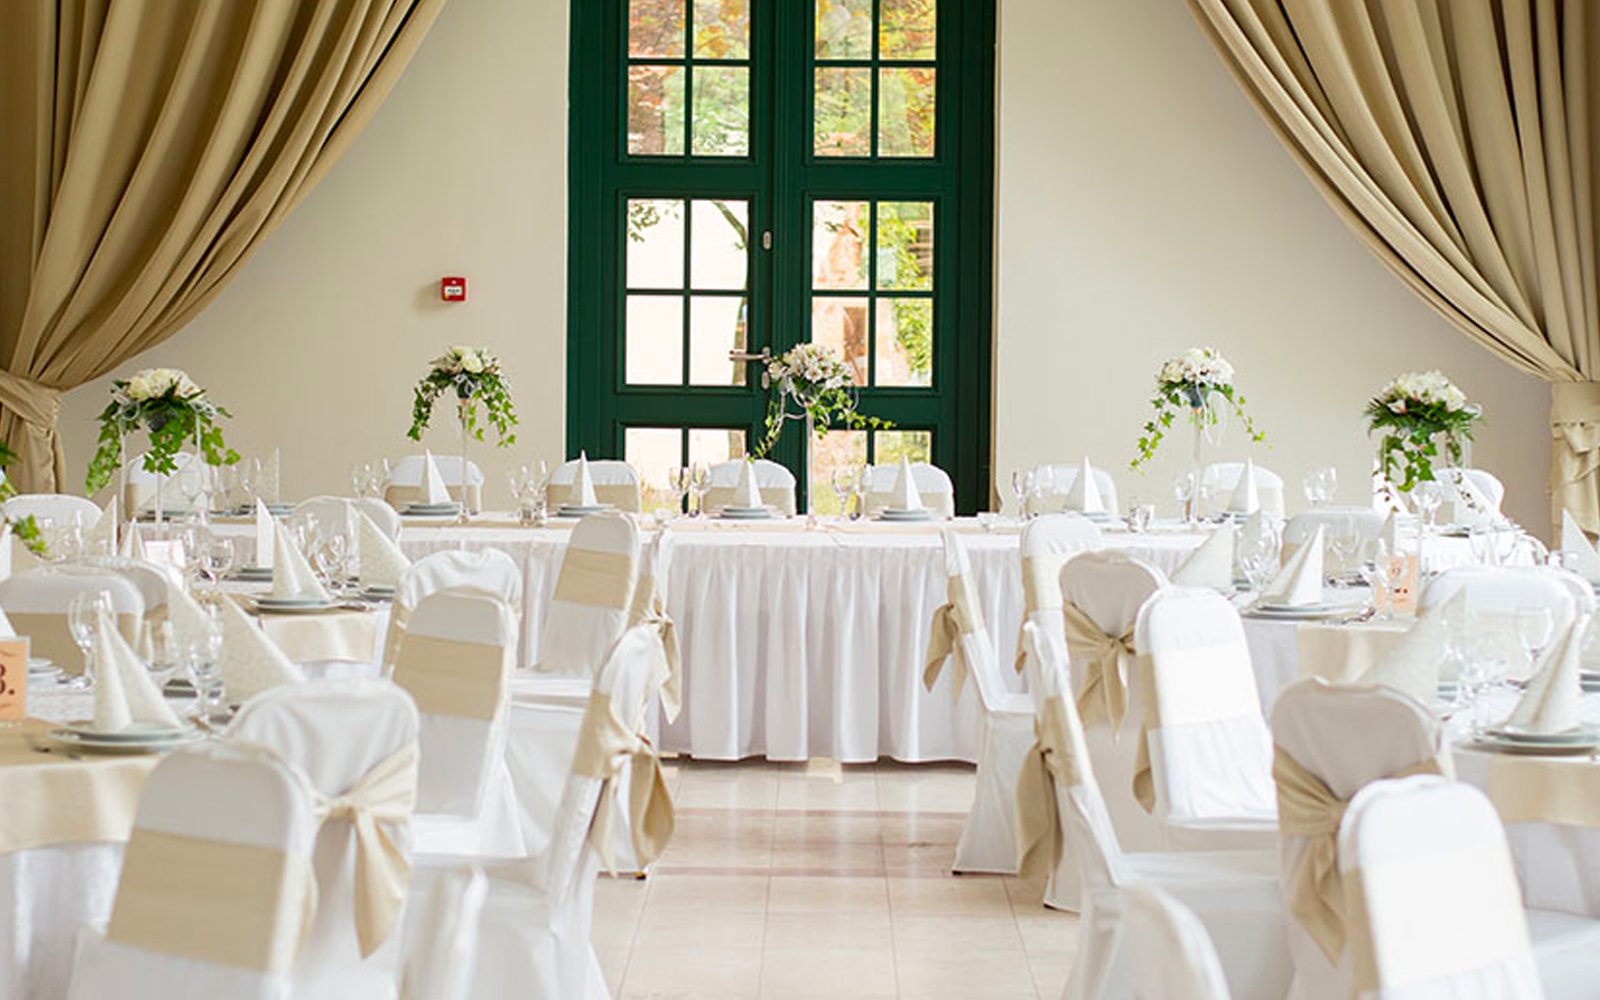 When Should You Book Your Wedding Venue?